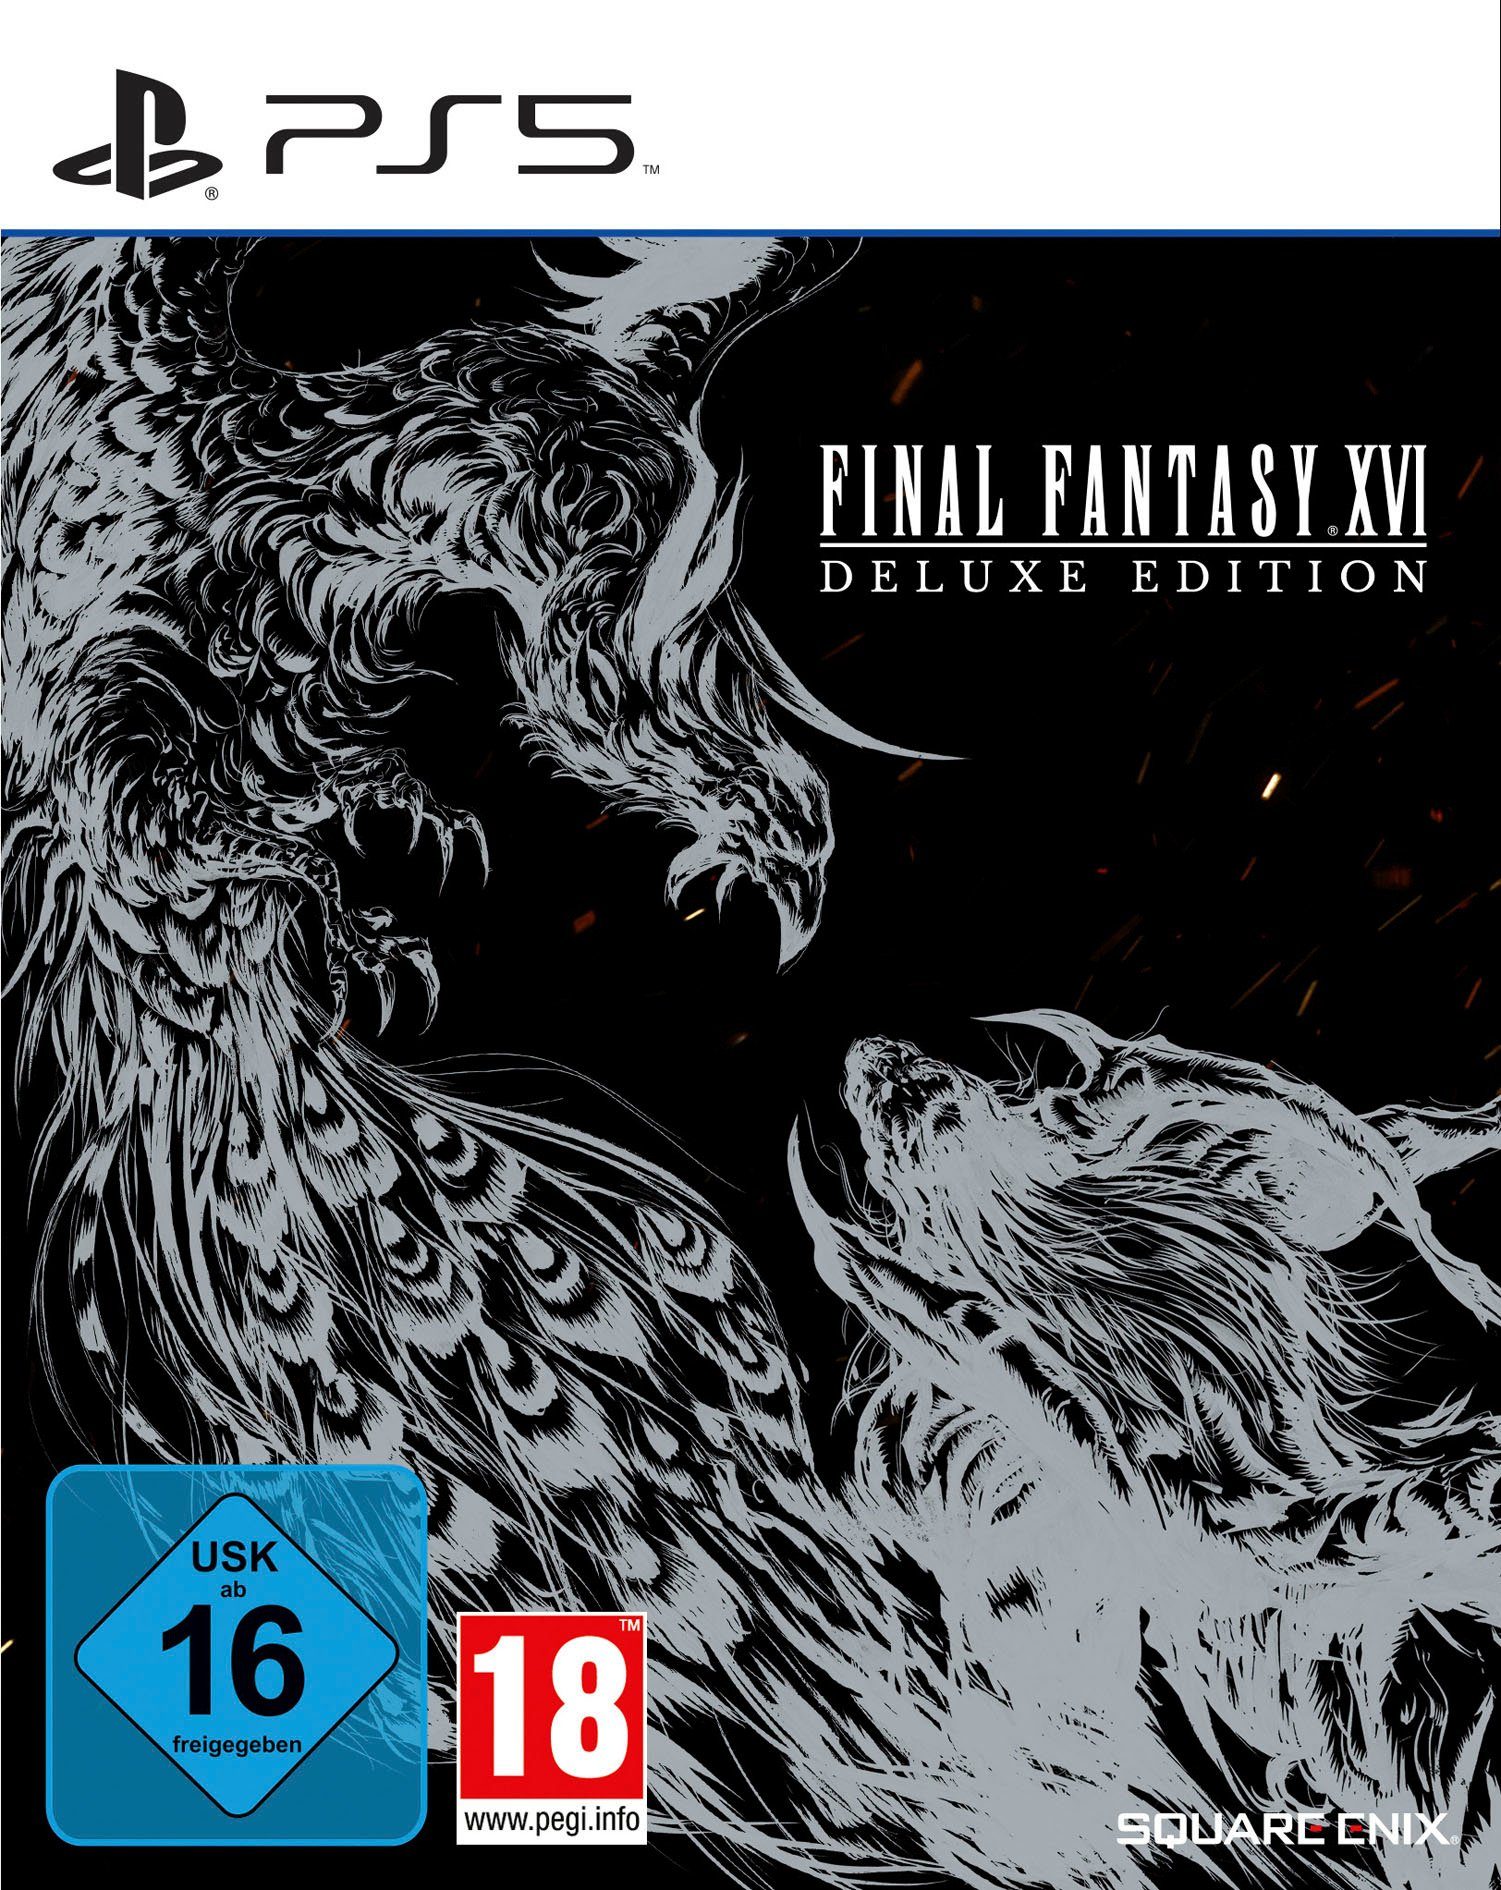 5 Edition PlayStation SquareEnix Deluxe Fantasy Final XVI